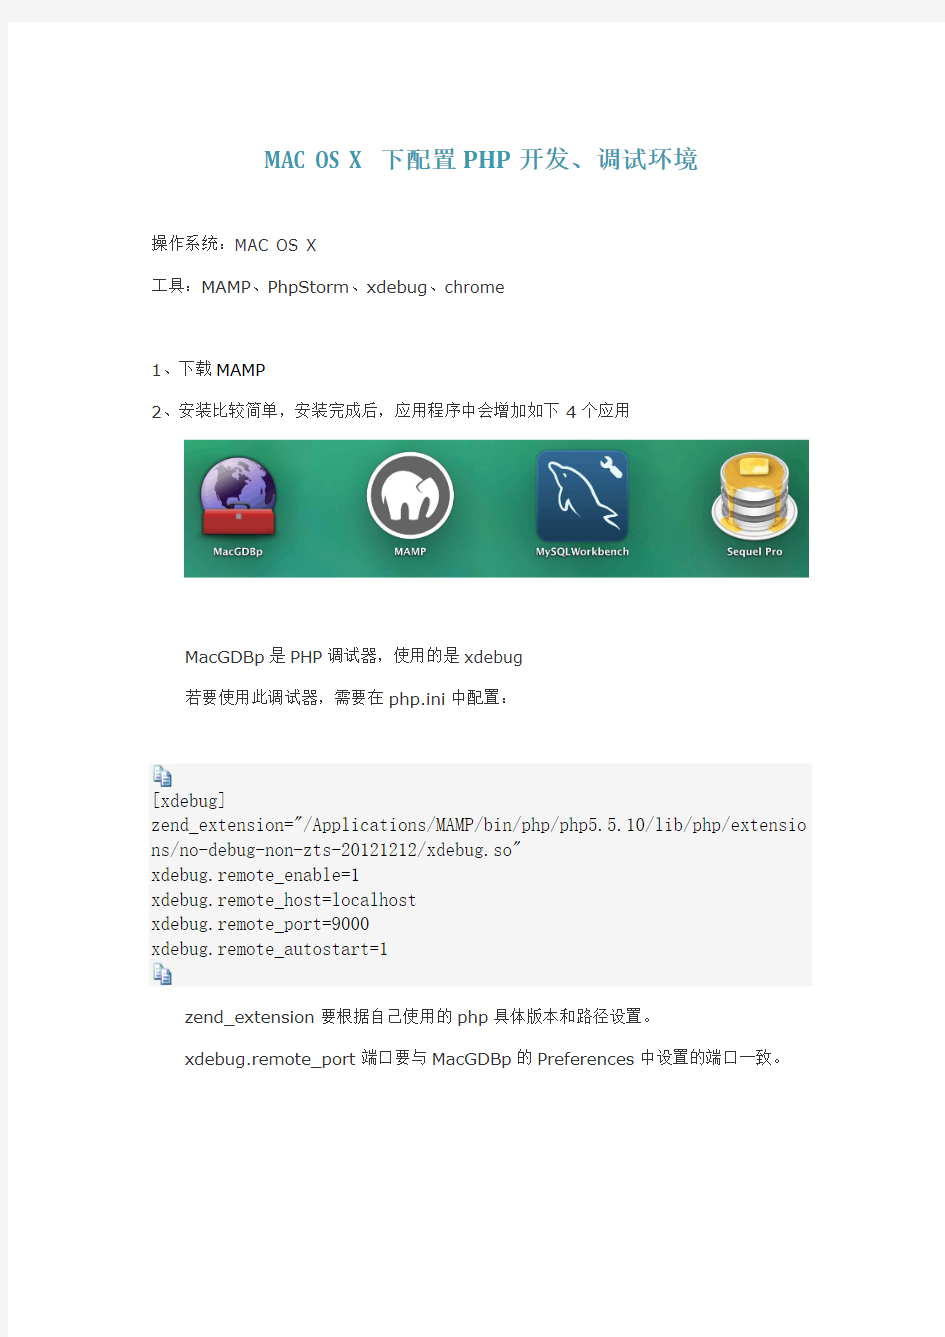 MAC OS X下配置PHP开发、调试环境